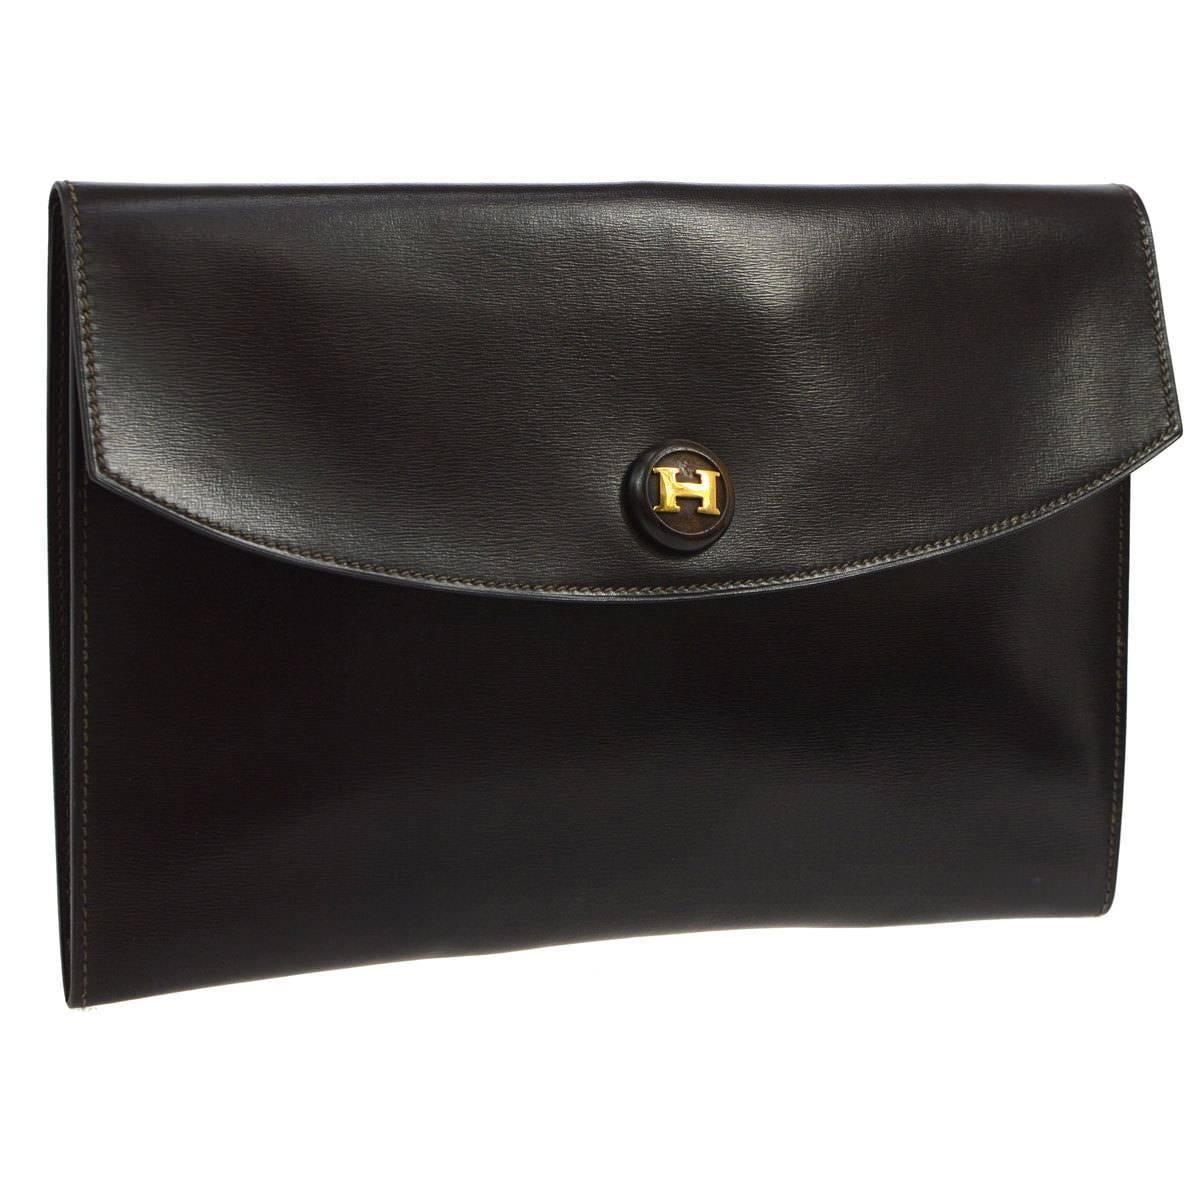 Hermes Dark Brown Chocolate Leather Envelope Evening Clutch Flap Bag